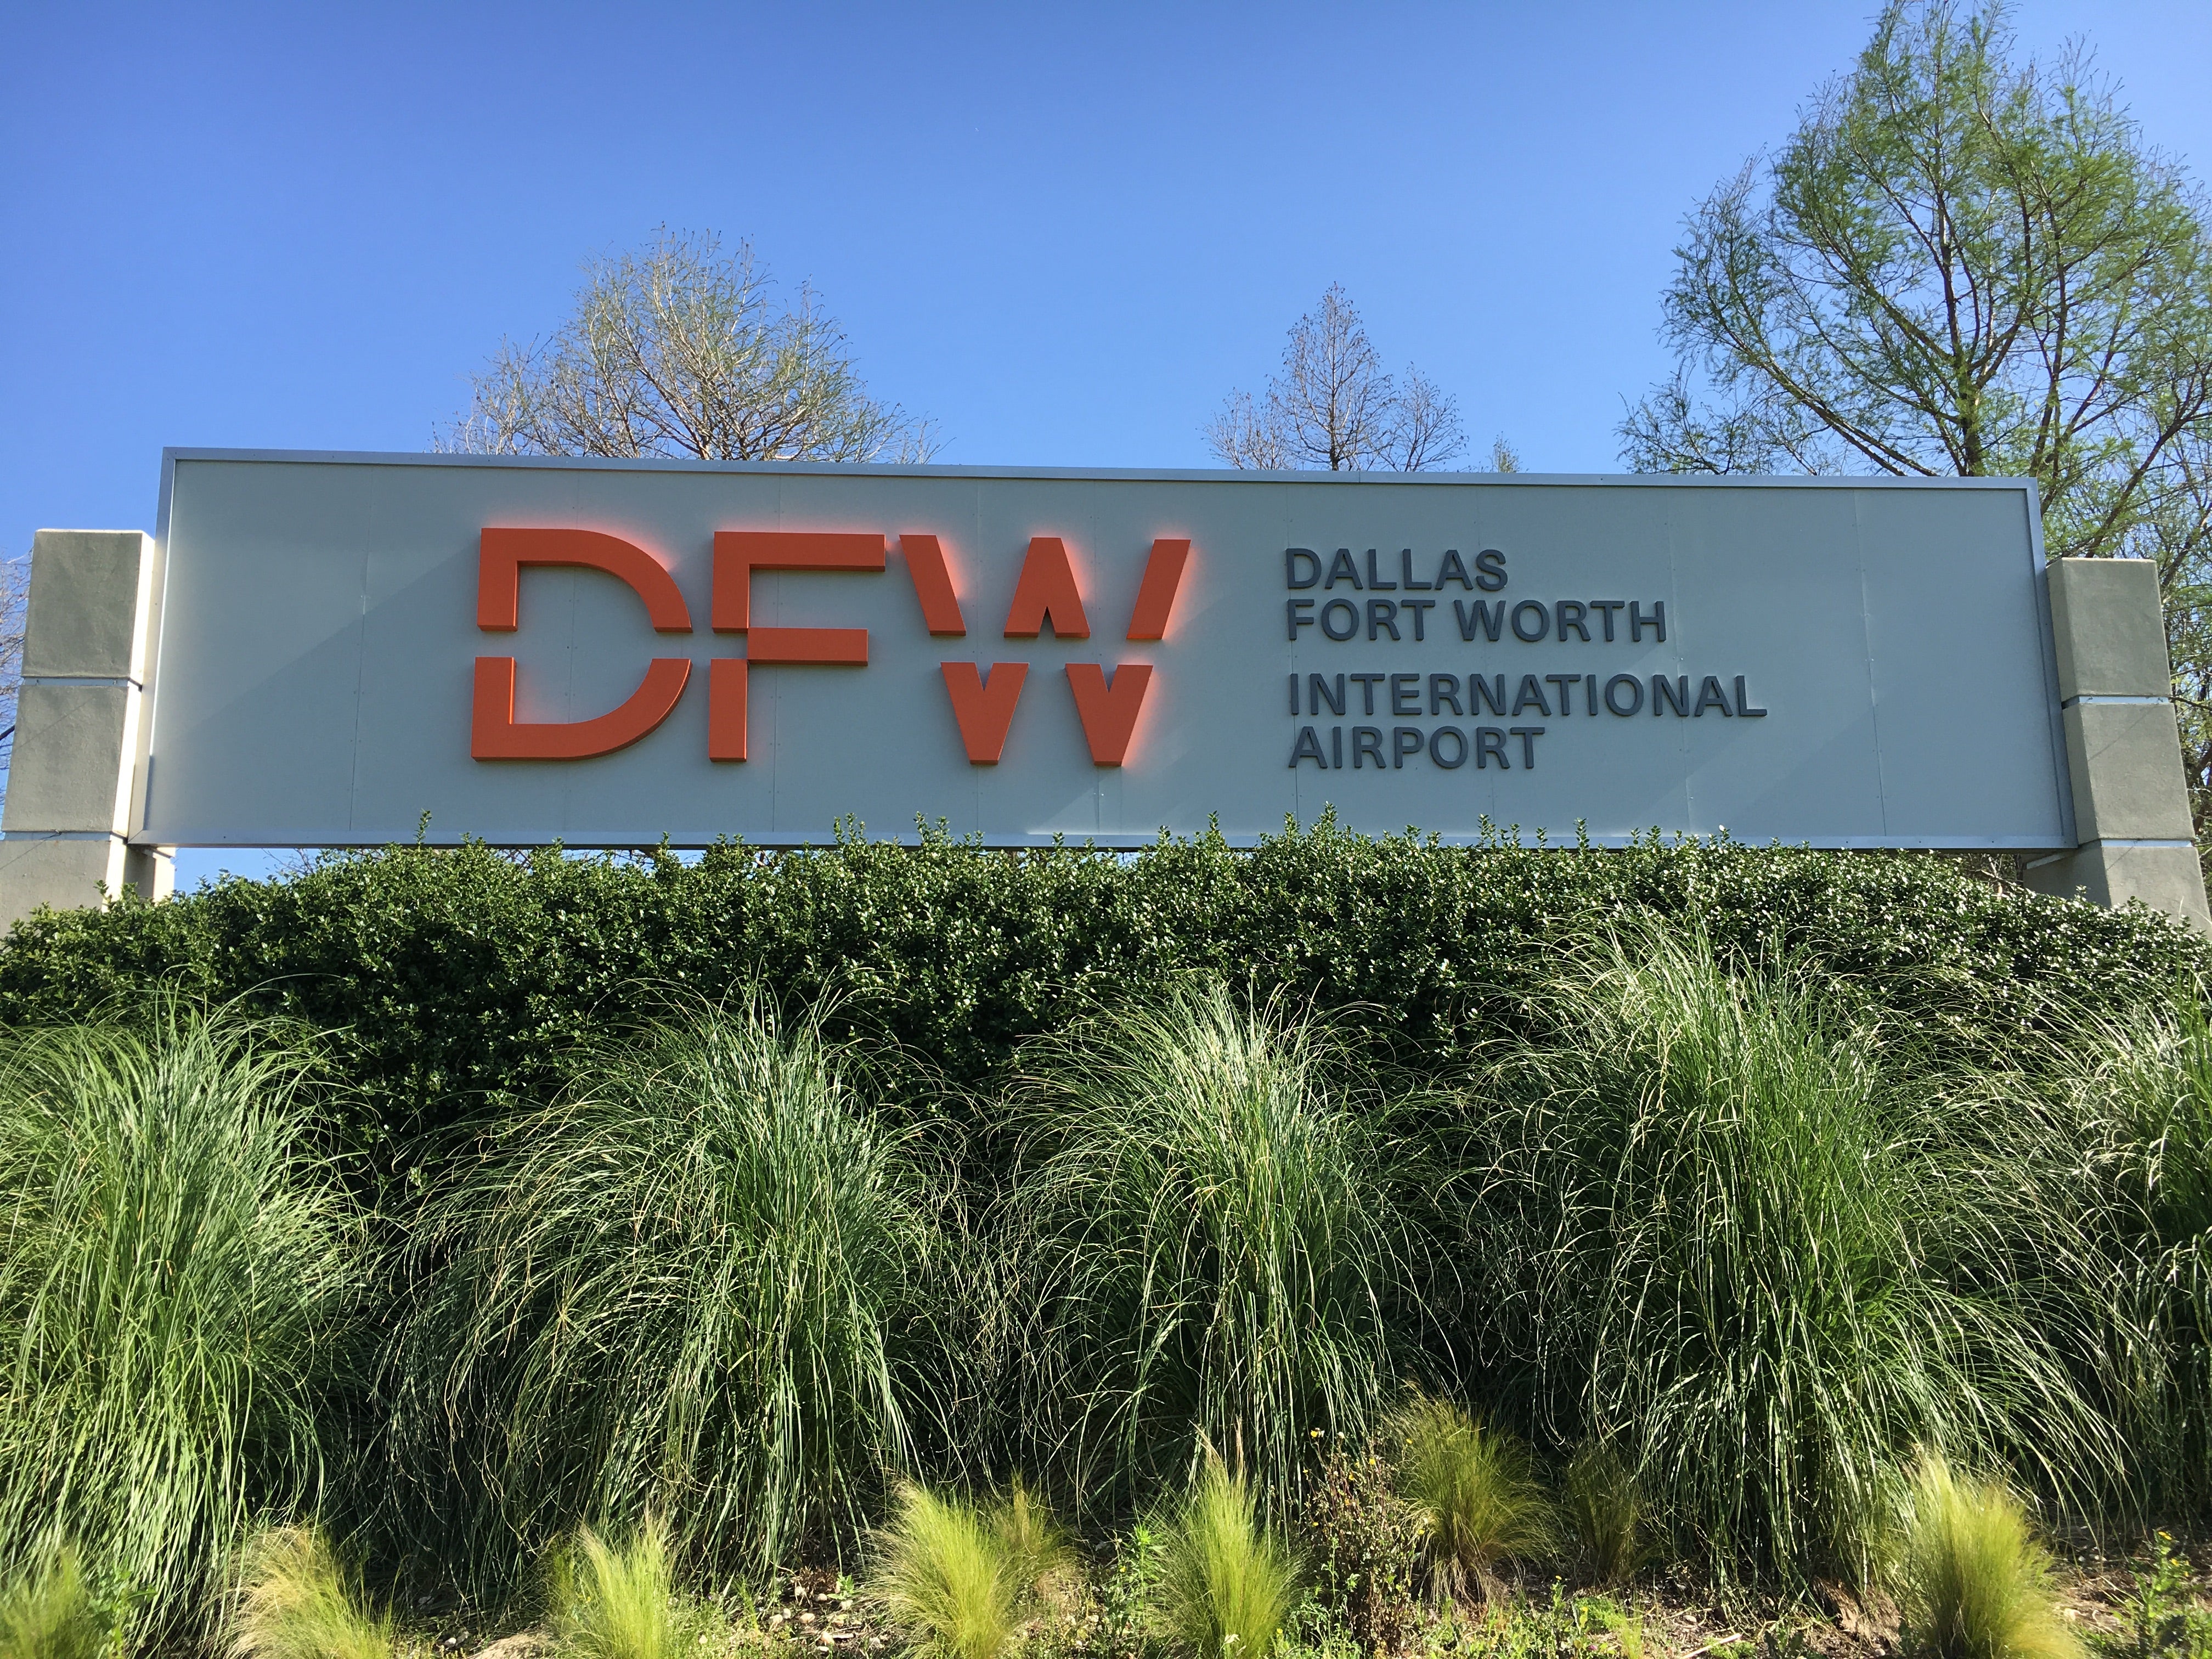 Dallas Fort Worth International Airport (DFW) (Dallas Fort Worth International Airport)